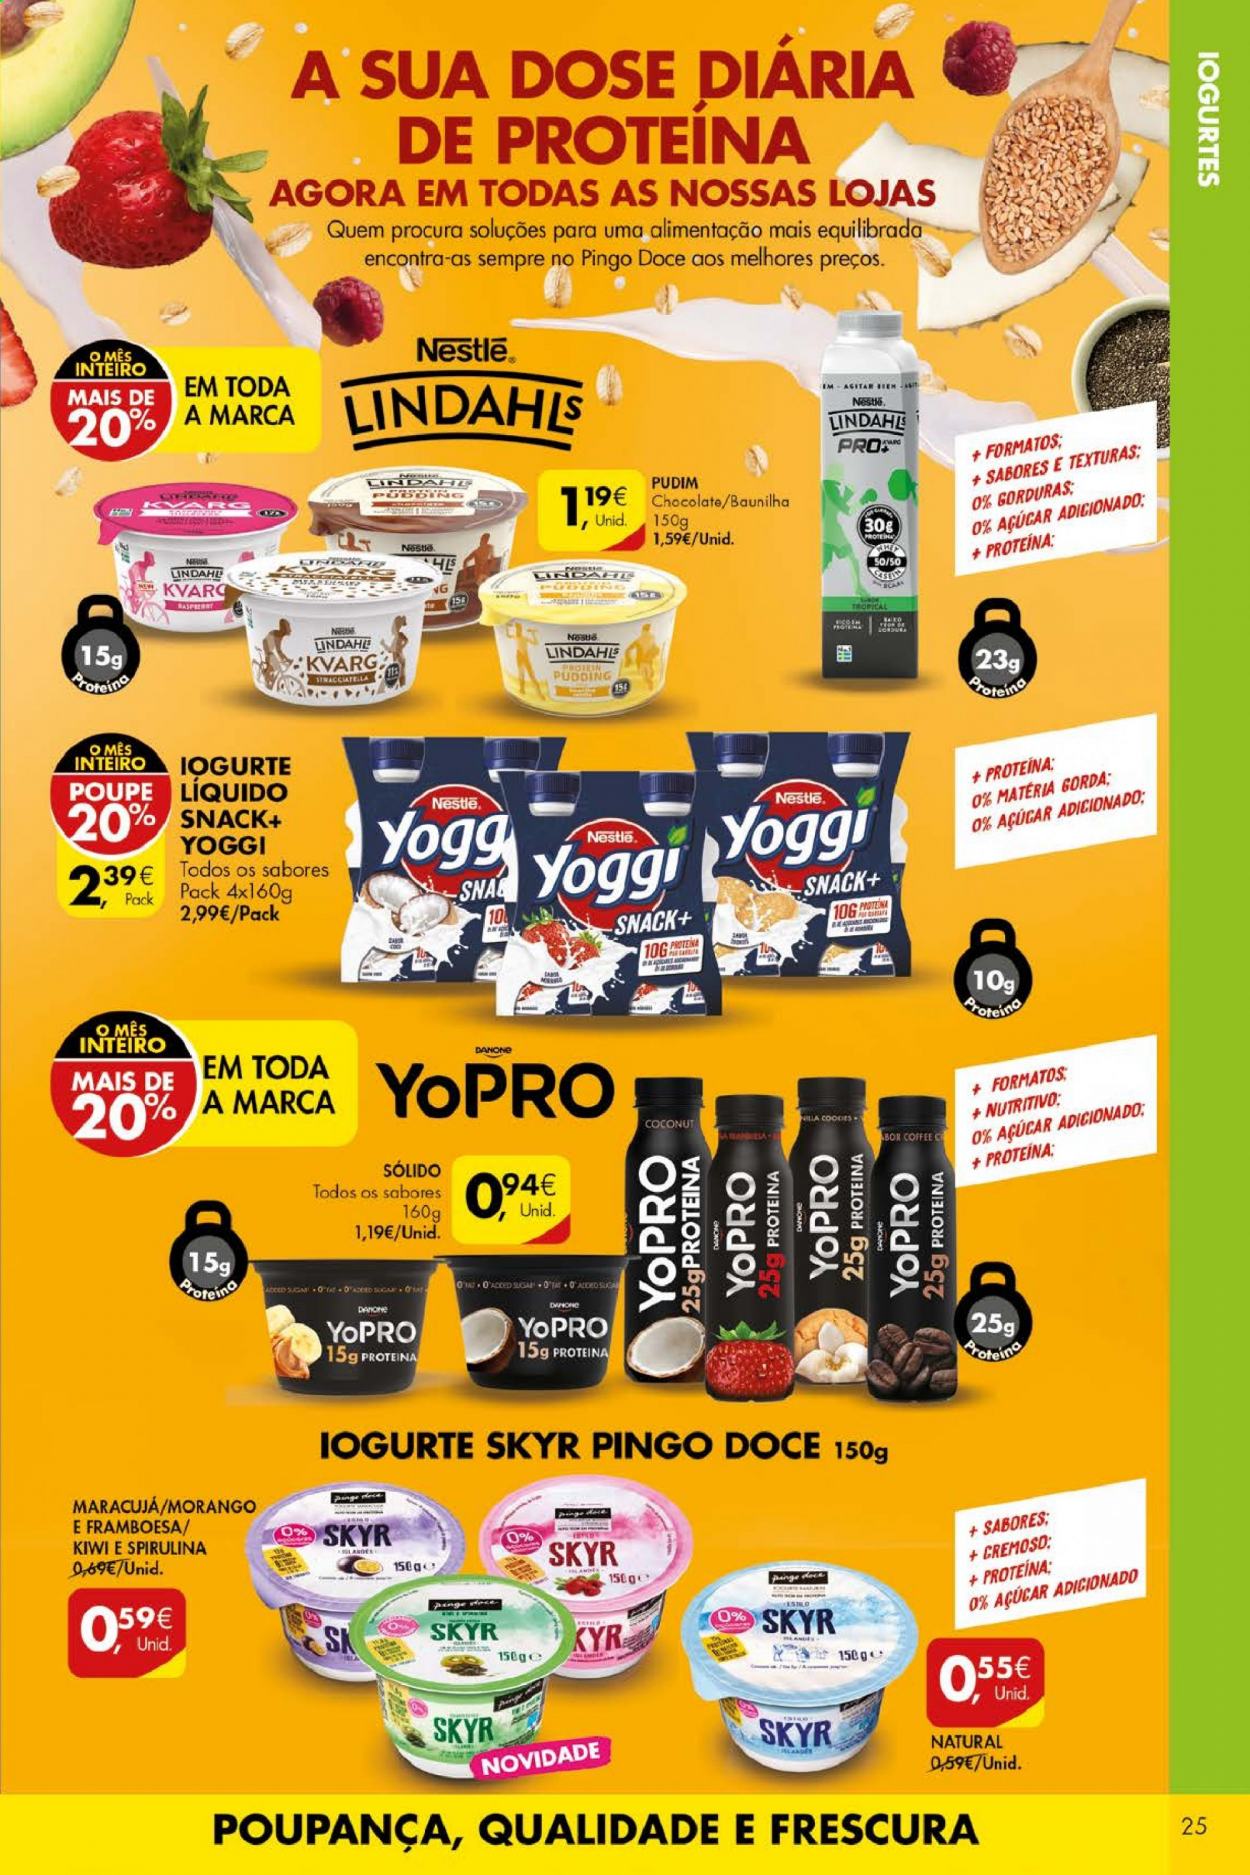 thumbnail - Folheto Pingo Doce - 29.6.2021 - 5.7.2021 - Produtos em promoção - kiwi, iogurte, Danone, Yopro, pudim, Nestlé. Página 25.